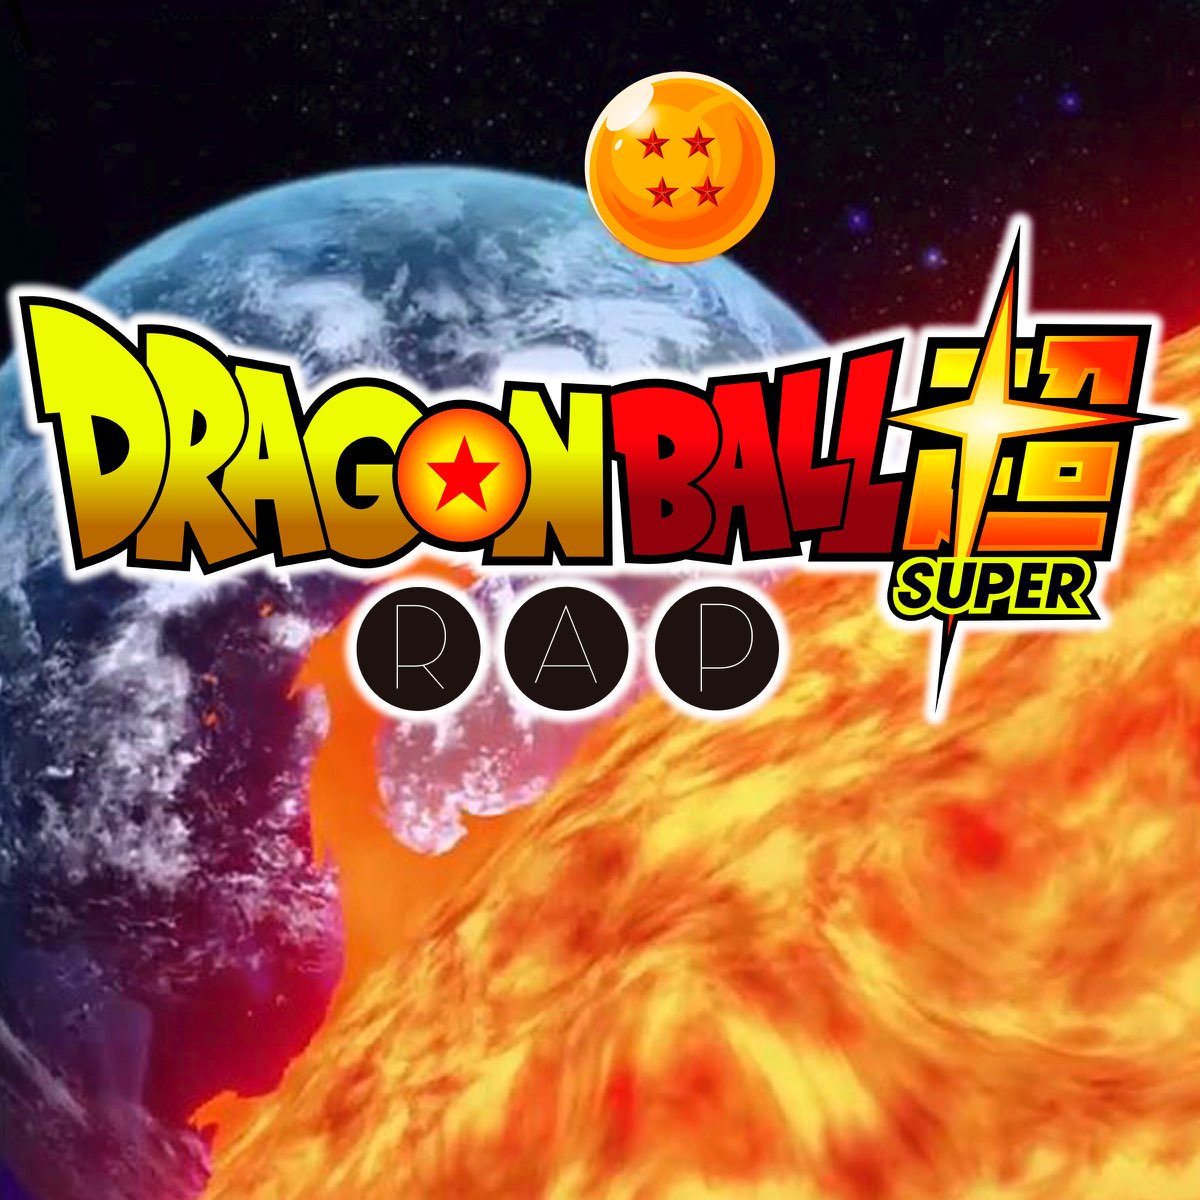 Dragon Ball Rap Super - Single của Porta trên Apple Music